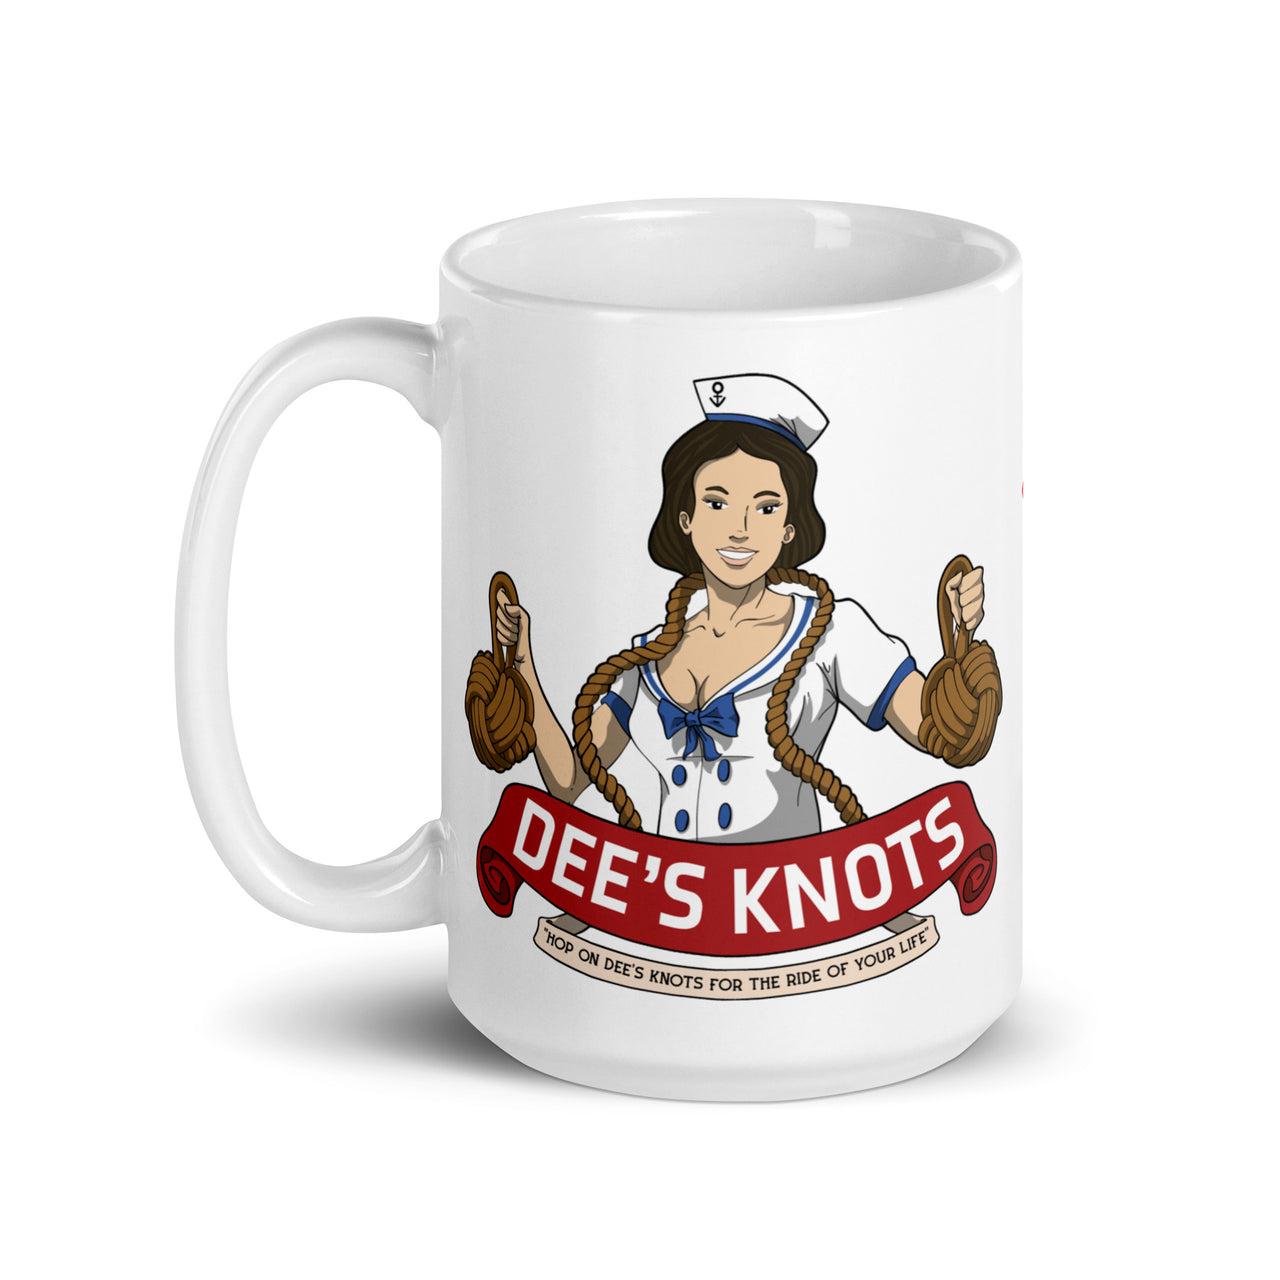 Dee's Knots- White glossy mug